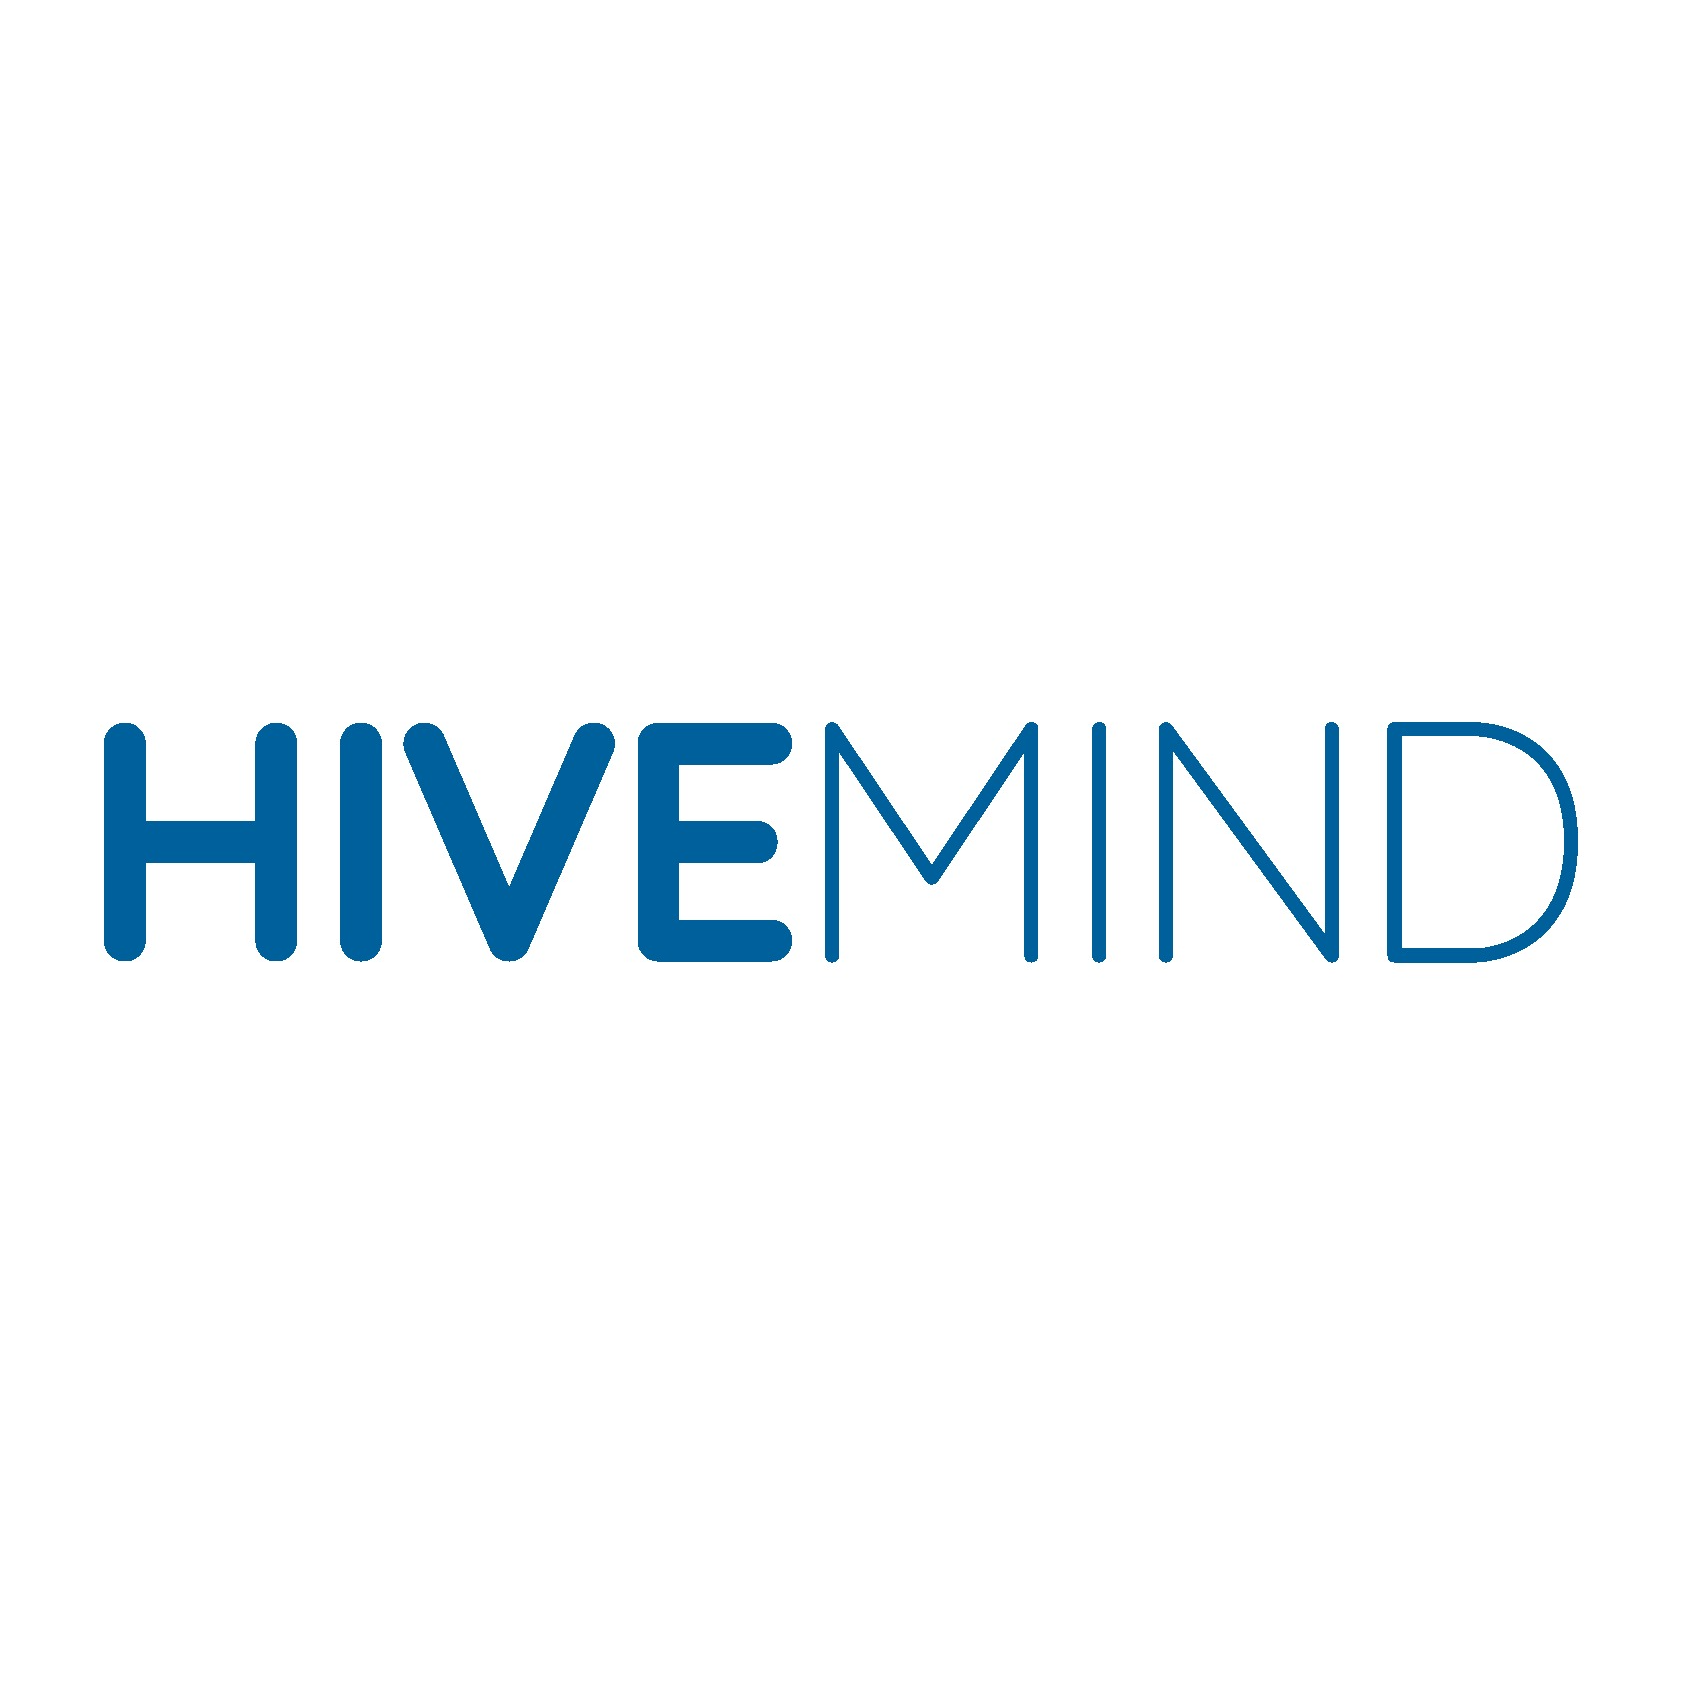 Hivemind Capital Partners